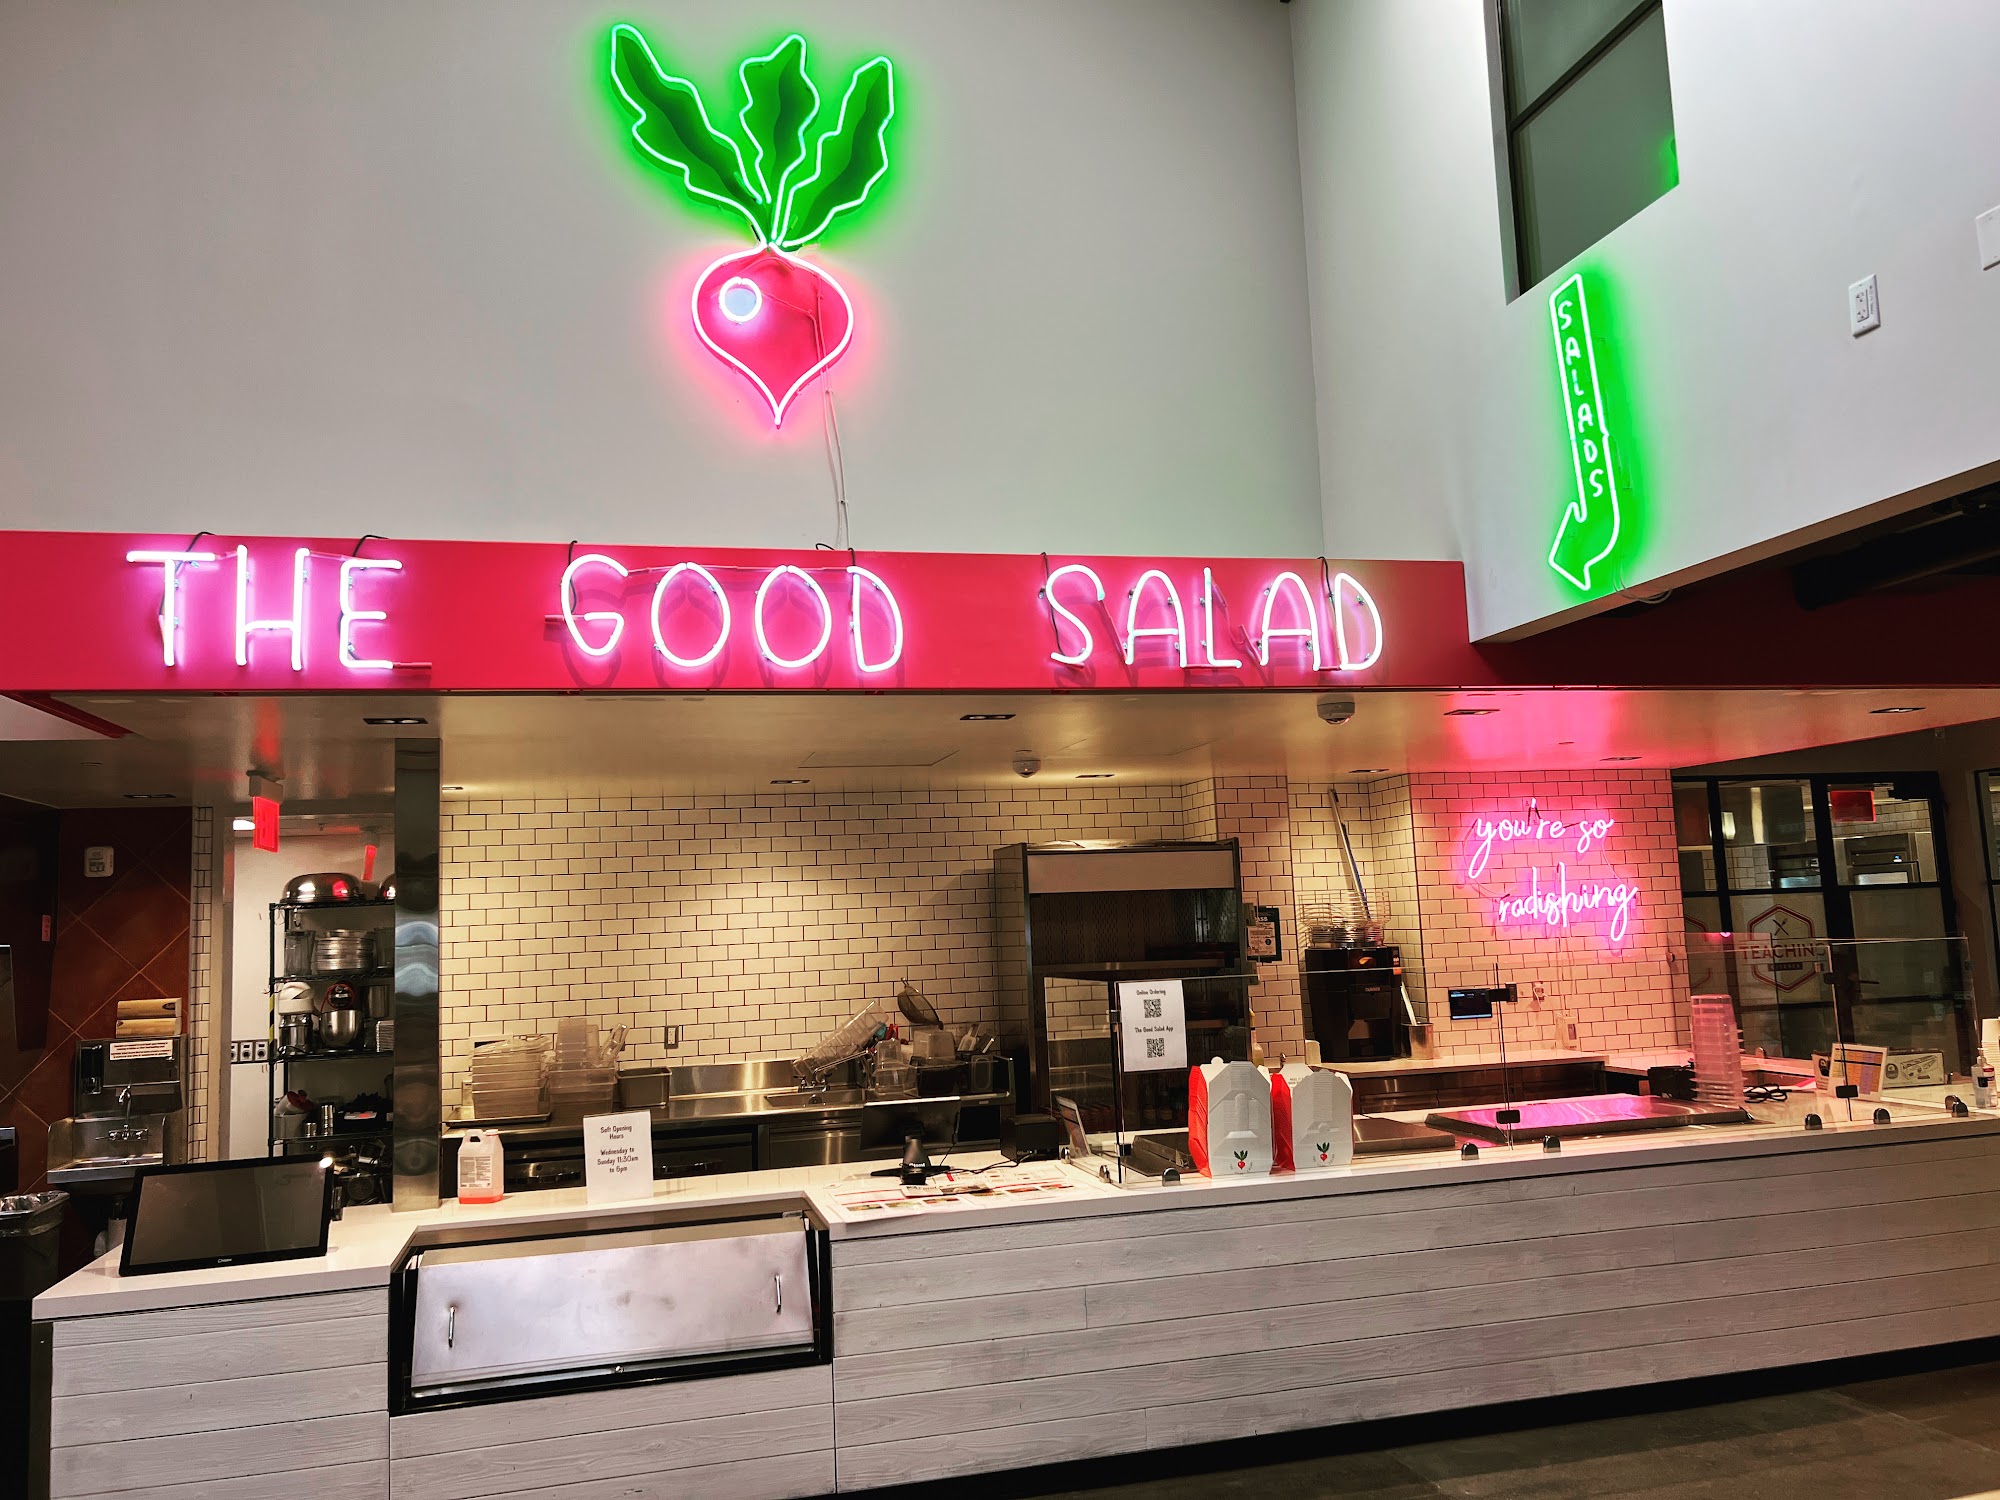 The Good Salad